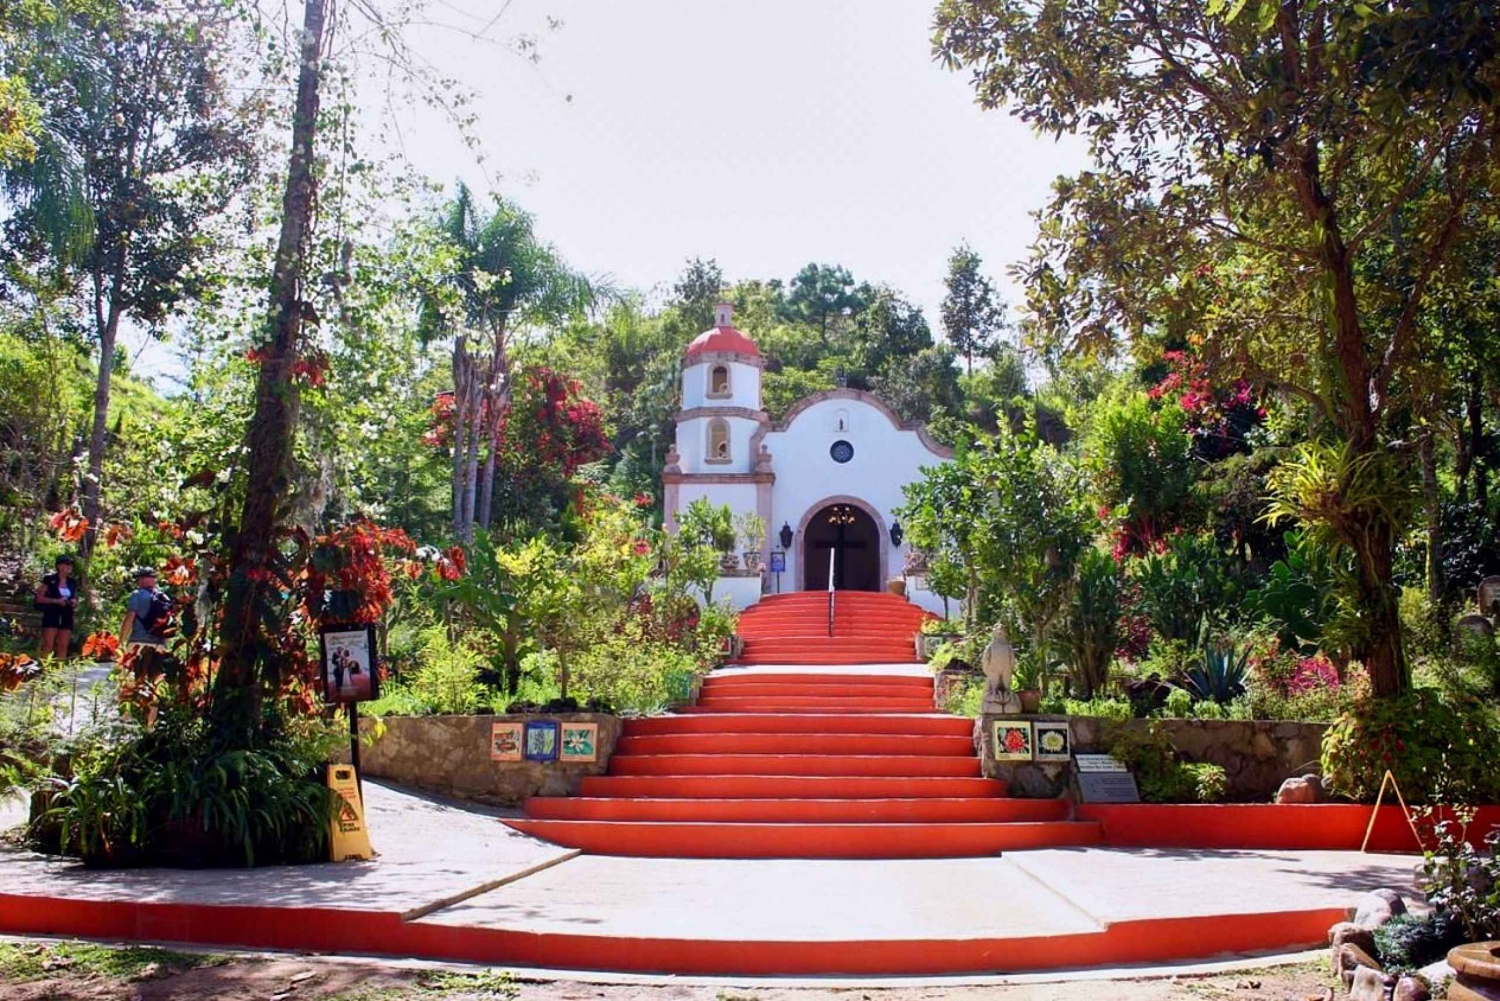 Puerto Vallarta: Botanical Gardens, Distillery & Coffee Tour